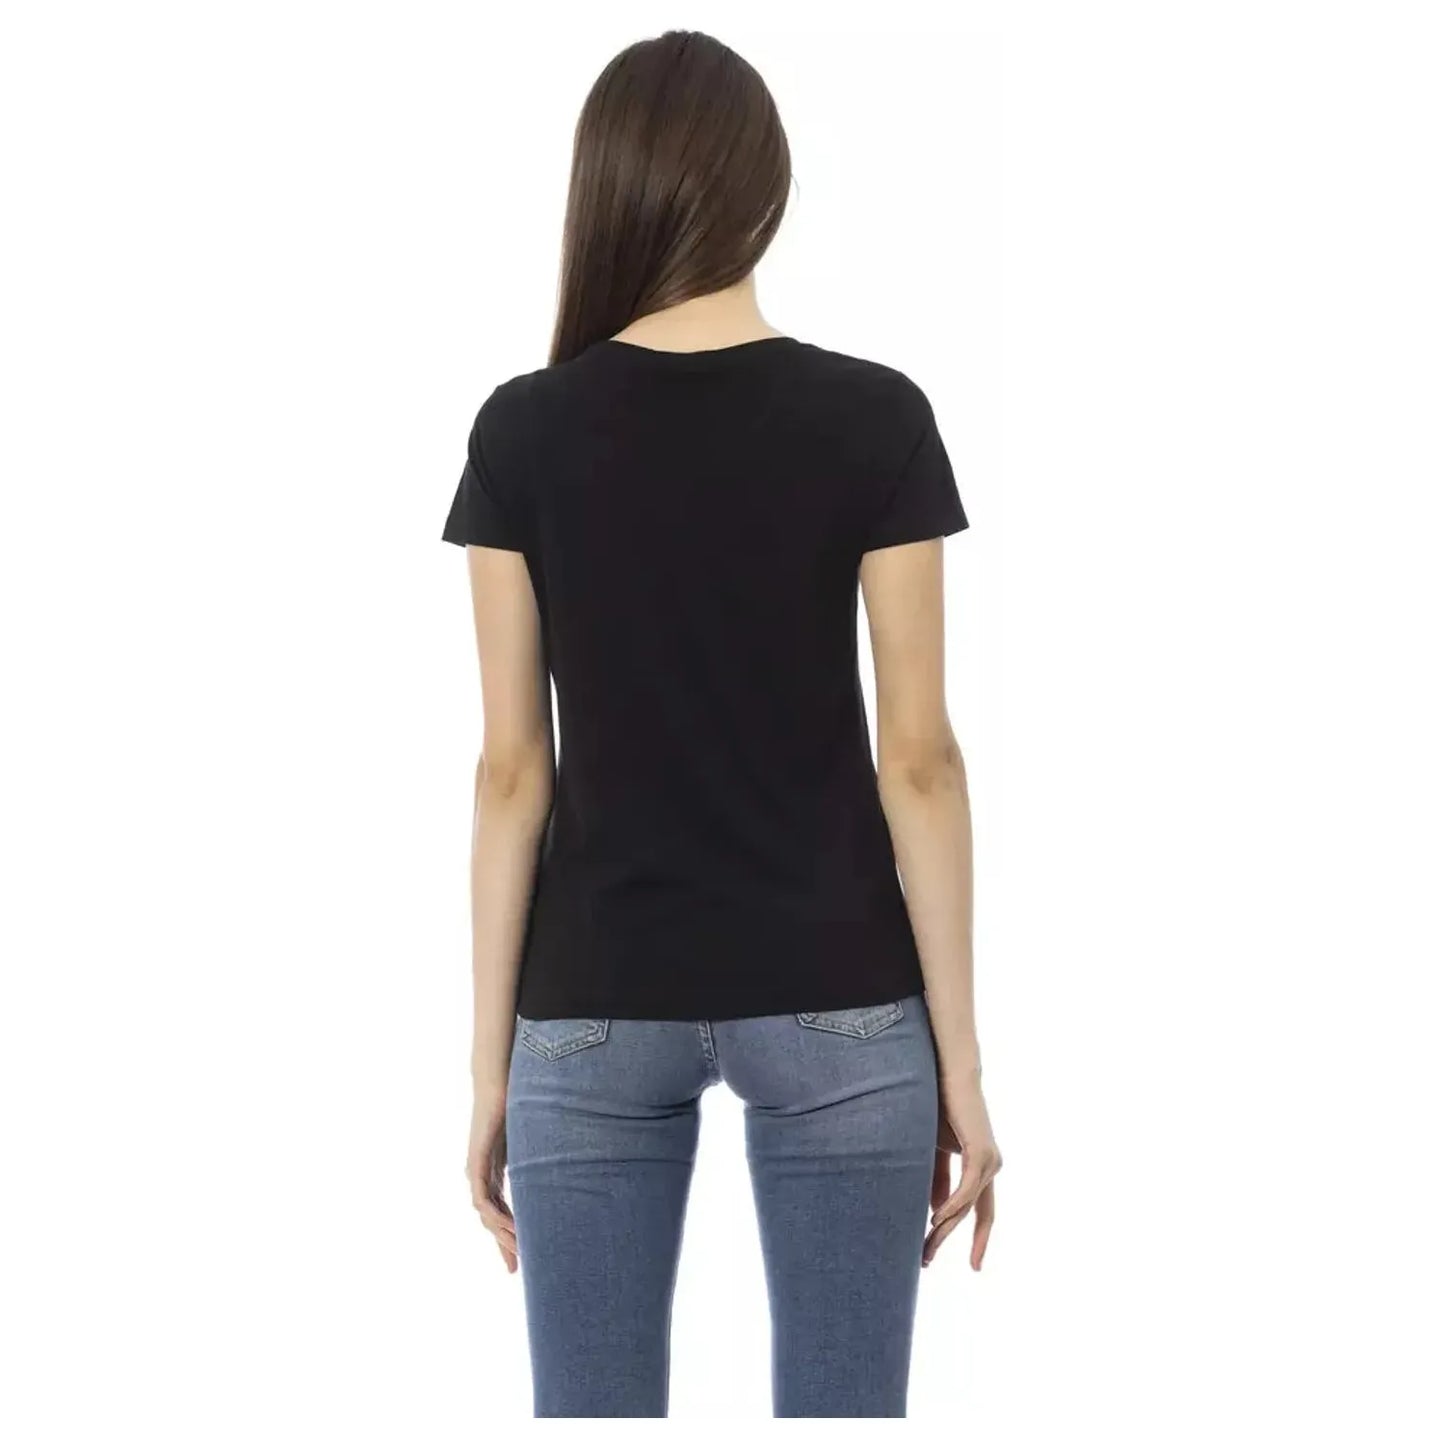 Trussardi Action Elegant Short Sleeve Couture Tee black-cotton-tops-t-shirt-15 product-23036-793154331-19-17acaabe-c5d.webp